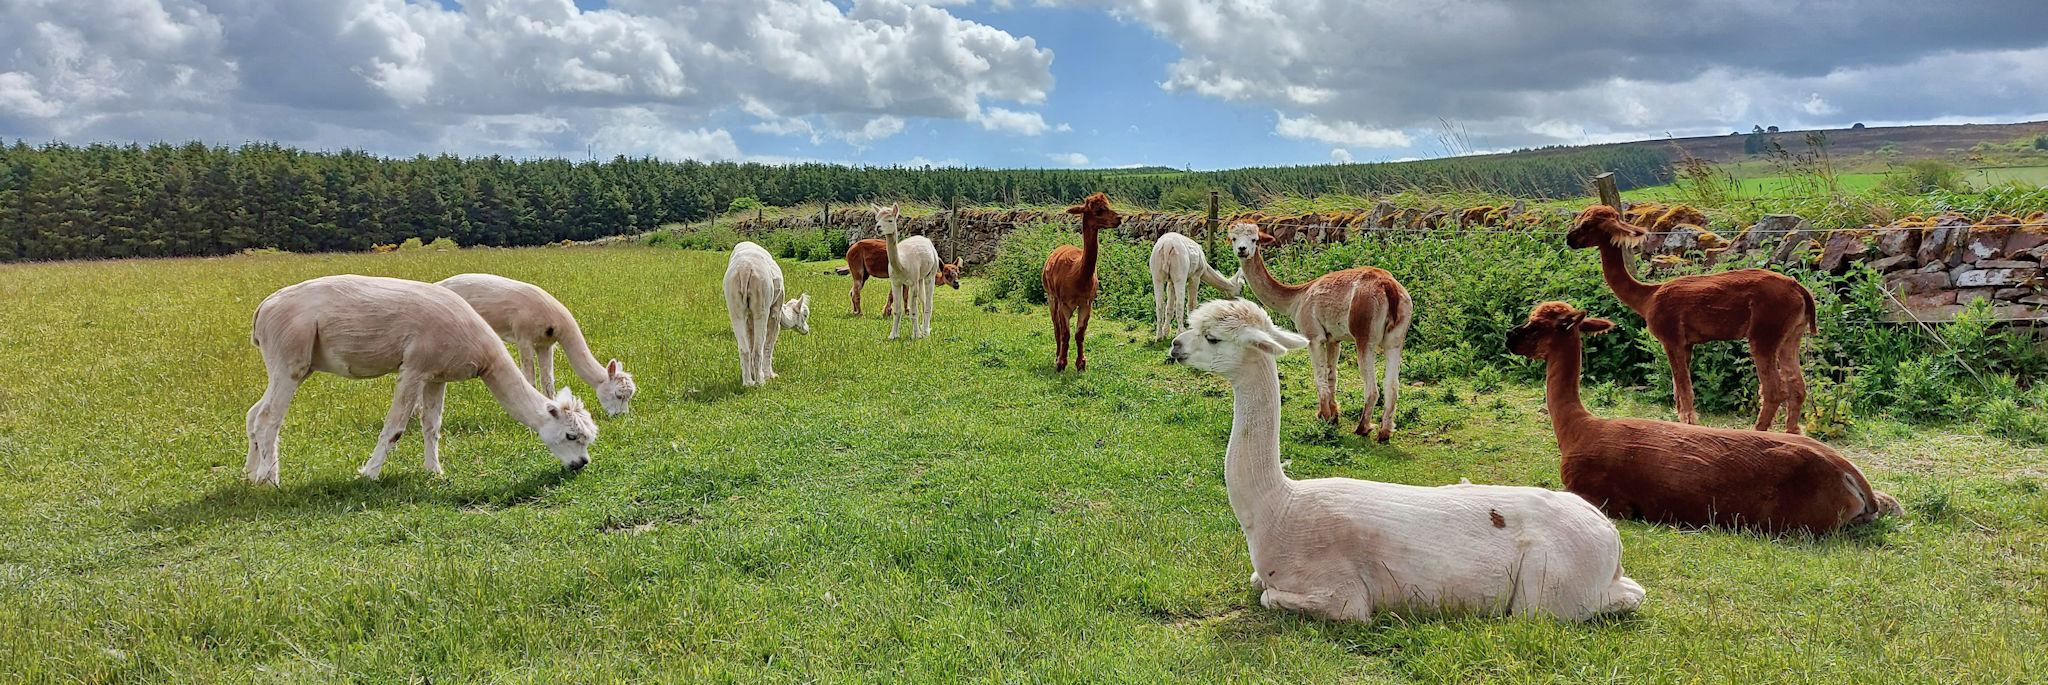 Alpacas at Newton Farm Holidays & Tours in Angus